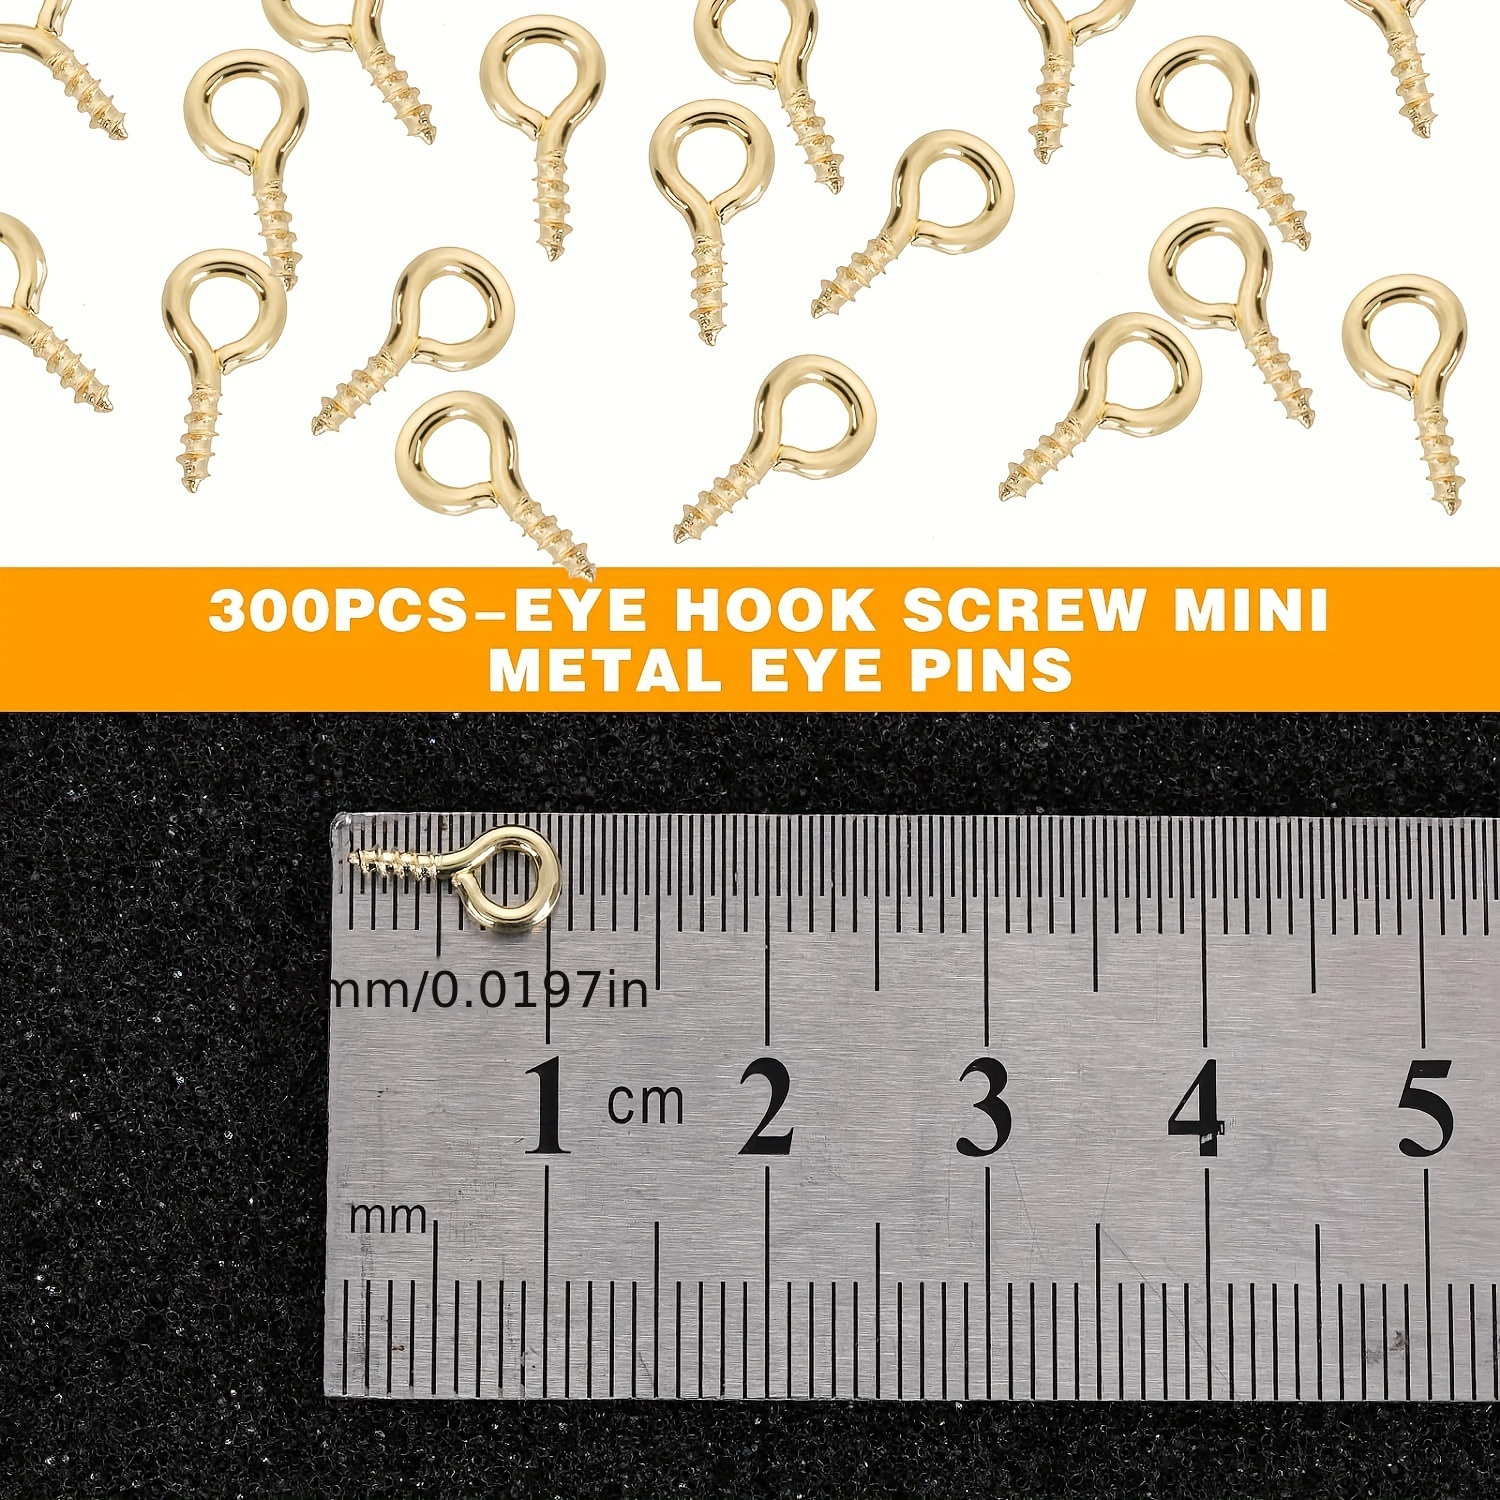 500pcs Small Screw Eye Pins, 4 x 8mm Eye Pin Hooks, Eyelets Screw Threaded Clasps Hooks for Doing Art DIY, Mini Metal Hoop Peg for Jewelry Making